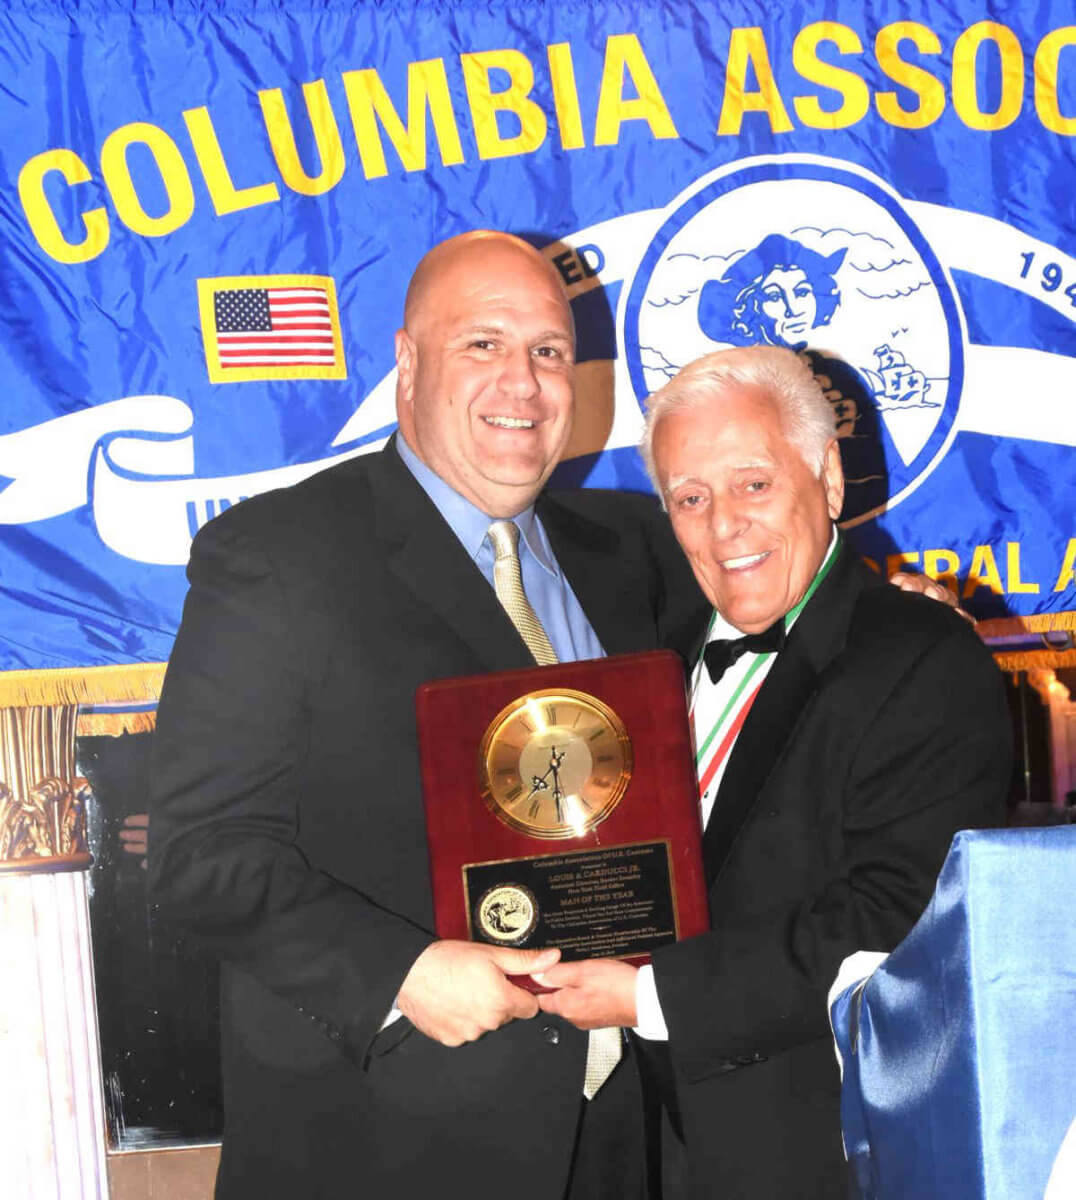 Columbia Assn. honors Carducci and Limb